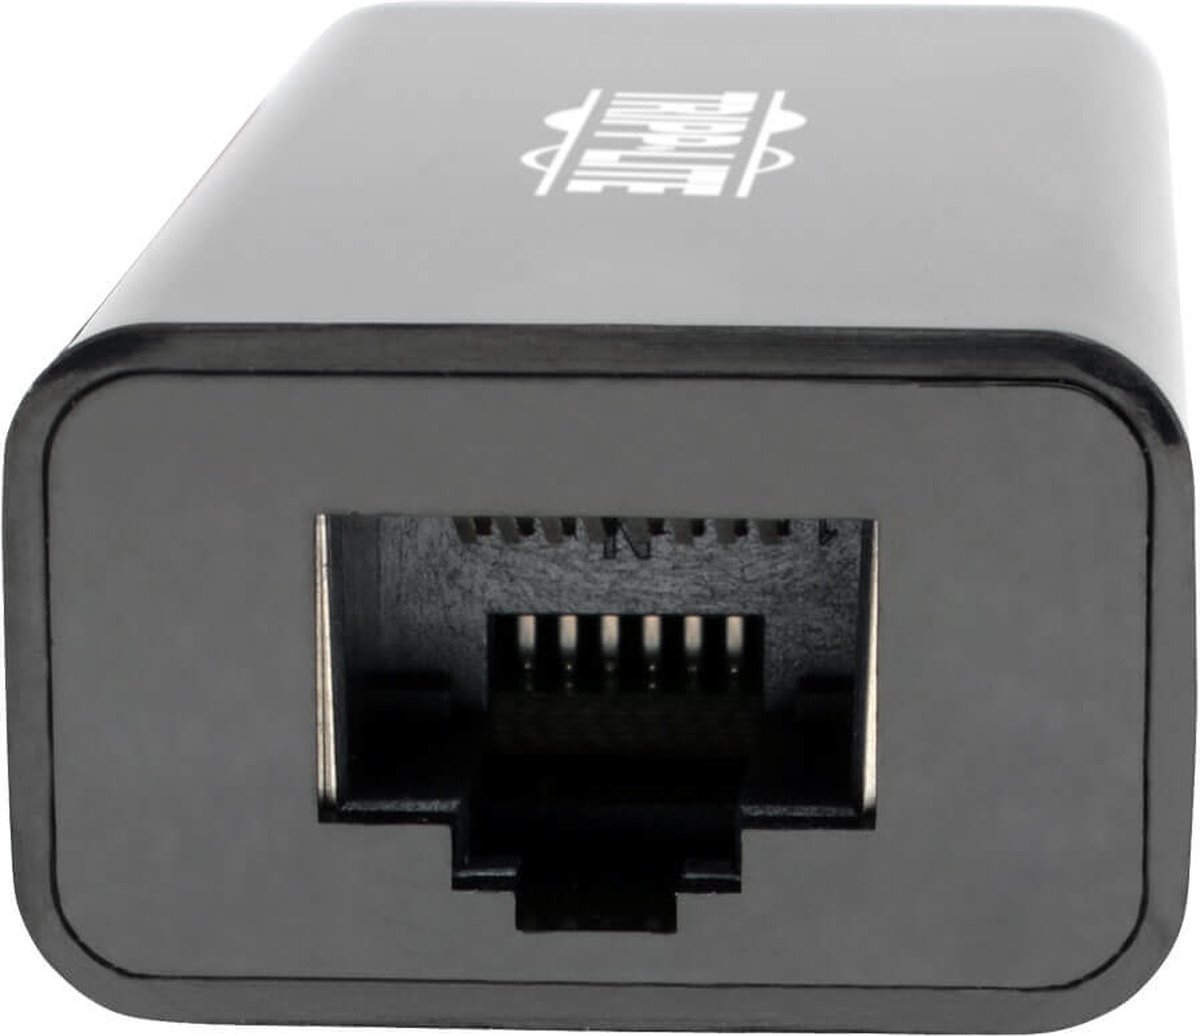 Tripp-Lite U436-06N-GB USB-C to Gigabit Network Adapter with Thunderbolt 3 Compatibility - Black TrippLite